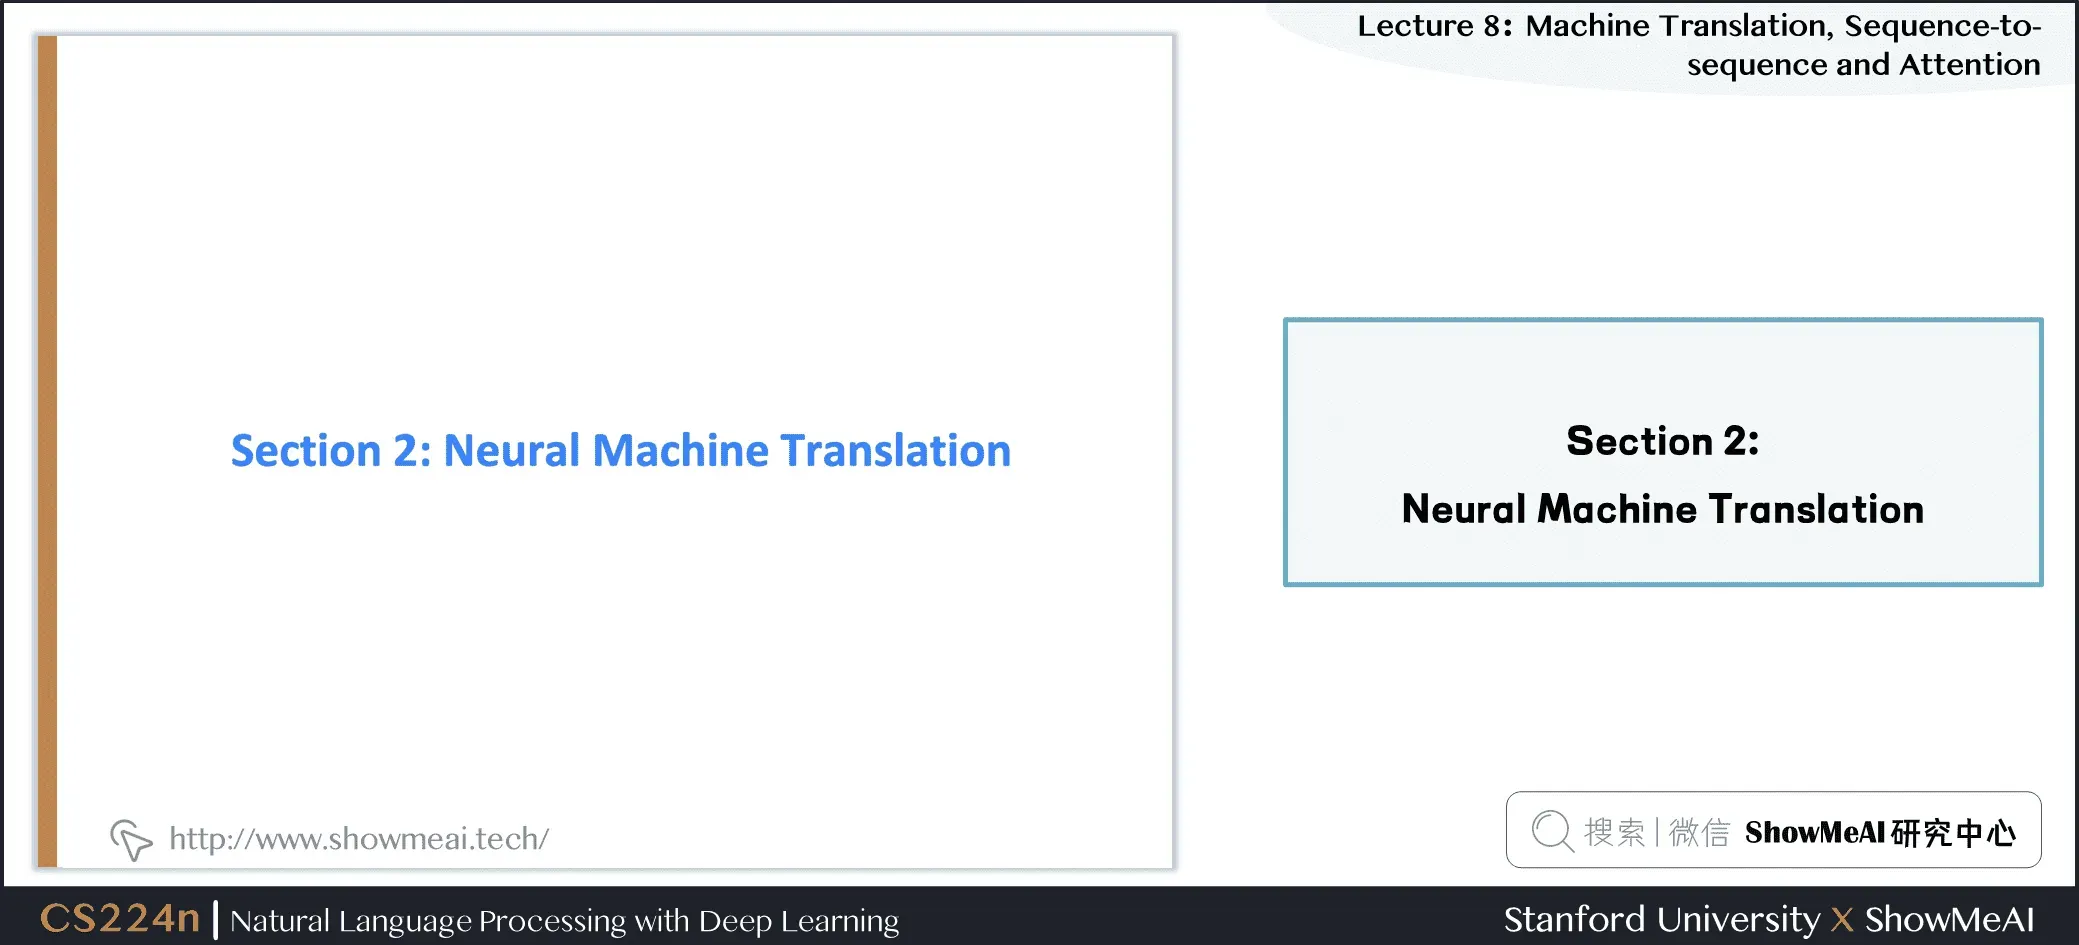 Neural Machine Translation